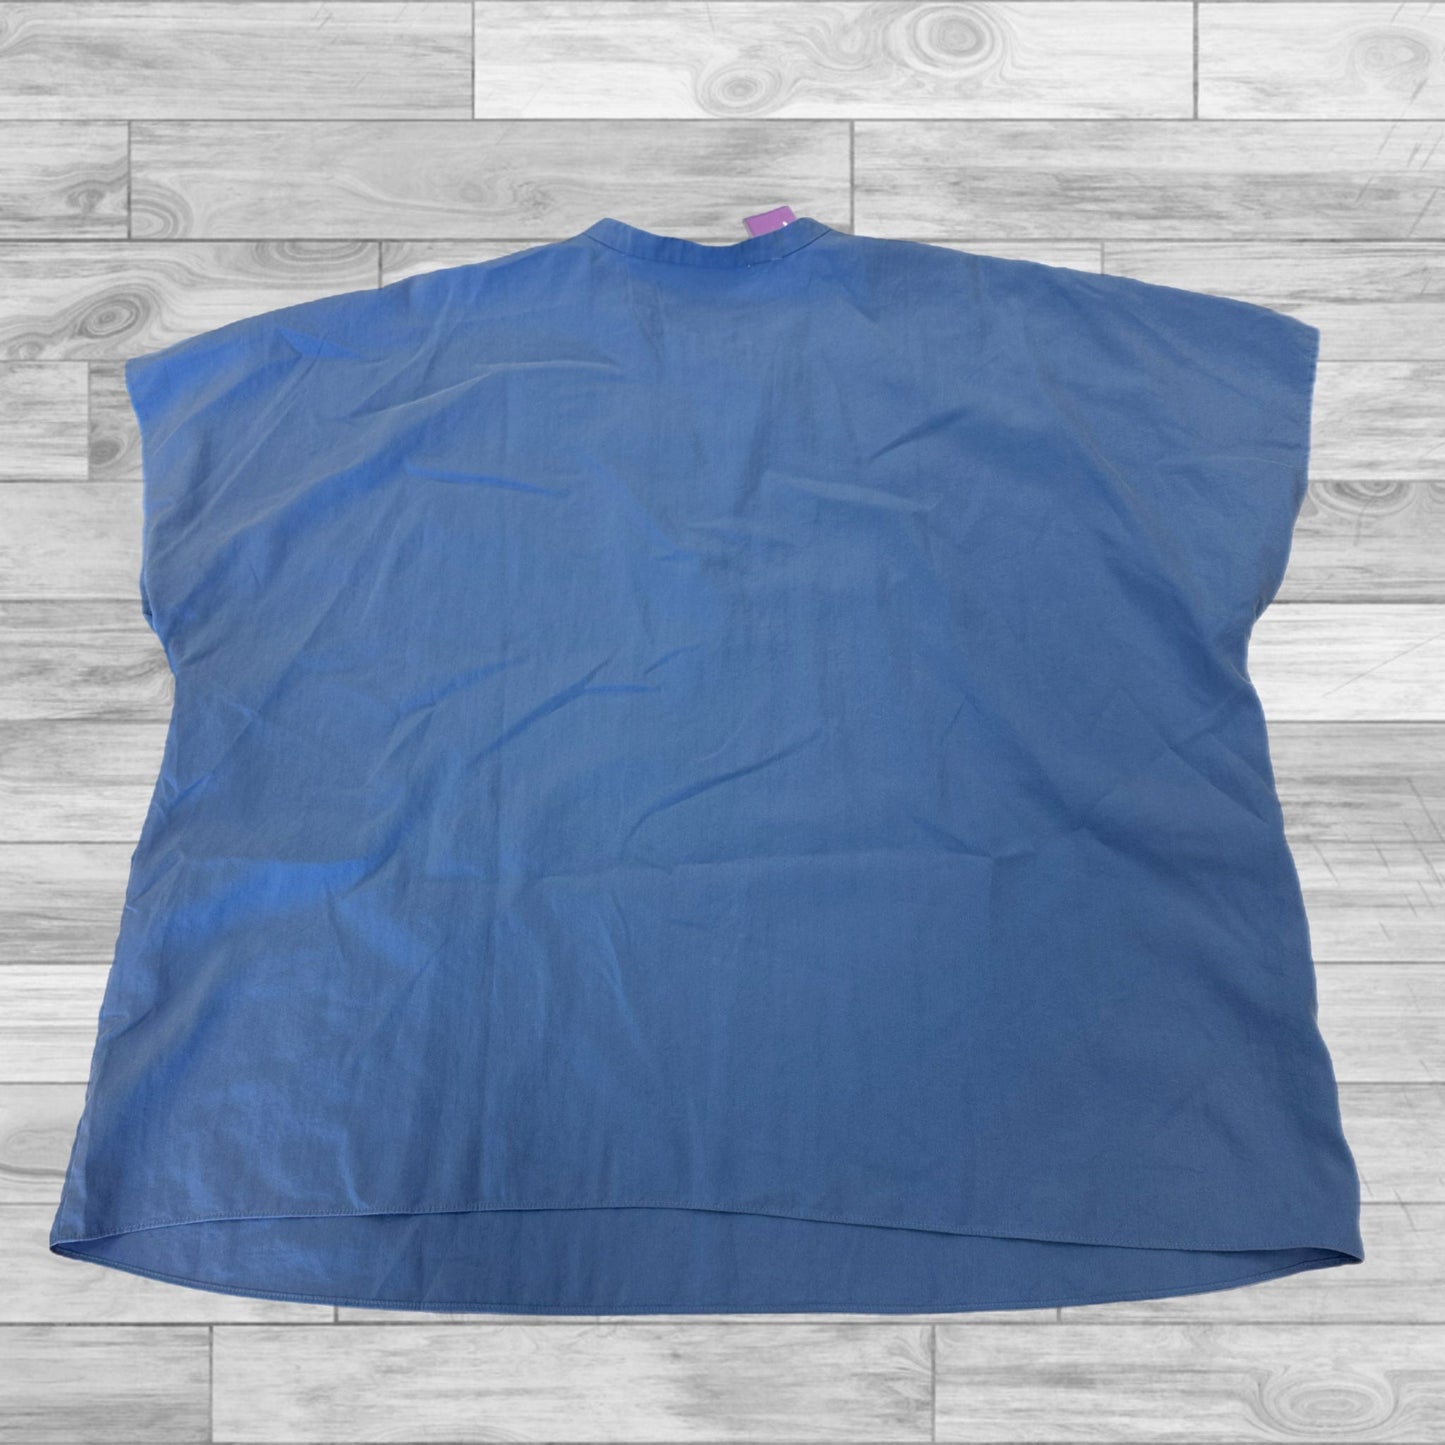 Blue Top Short Sleeve Eileen Fisher, Size Xl